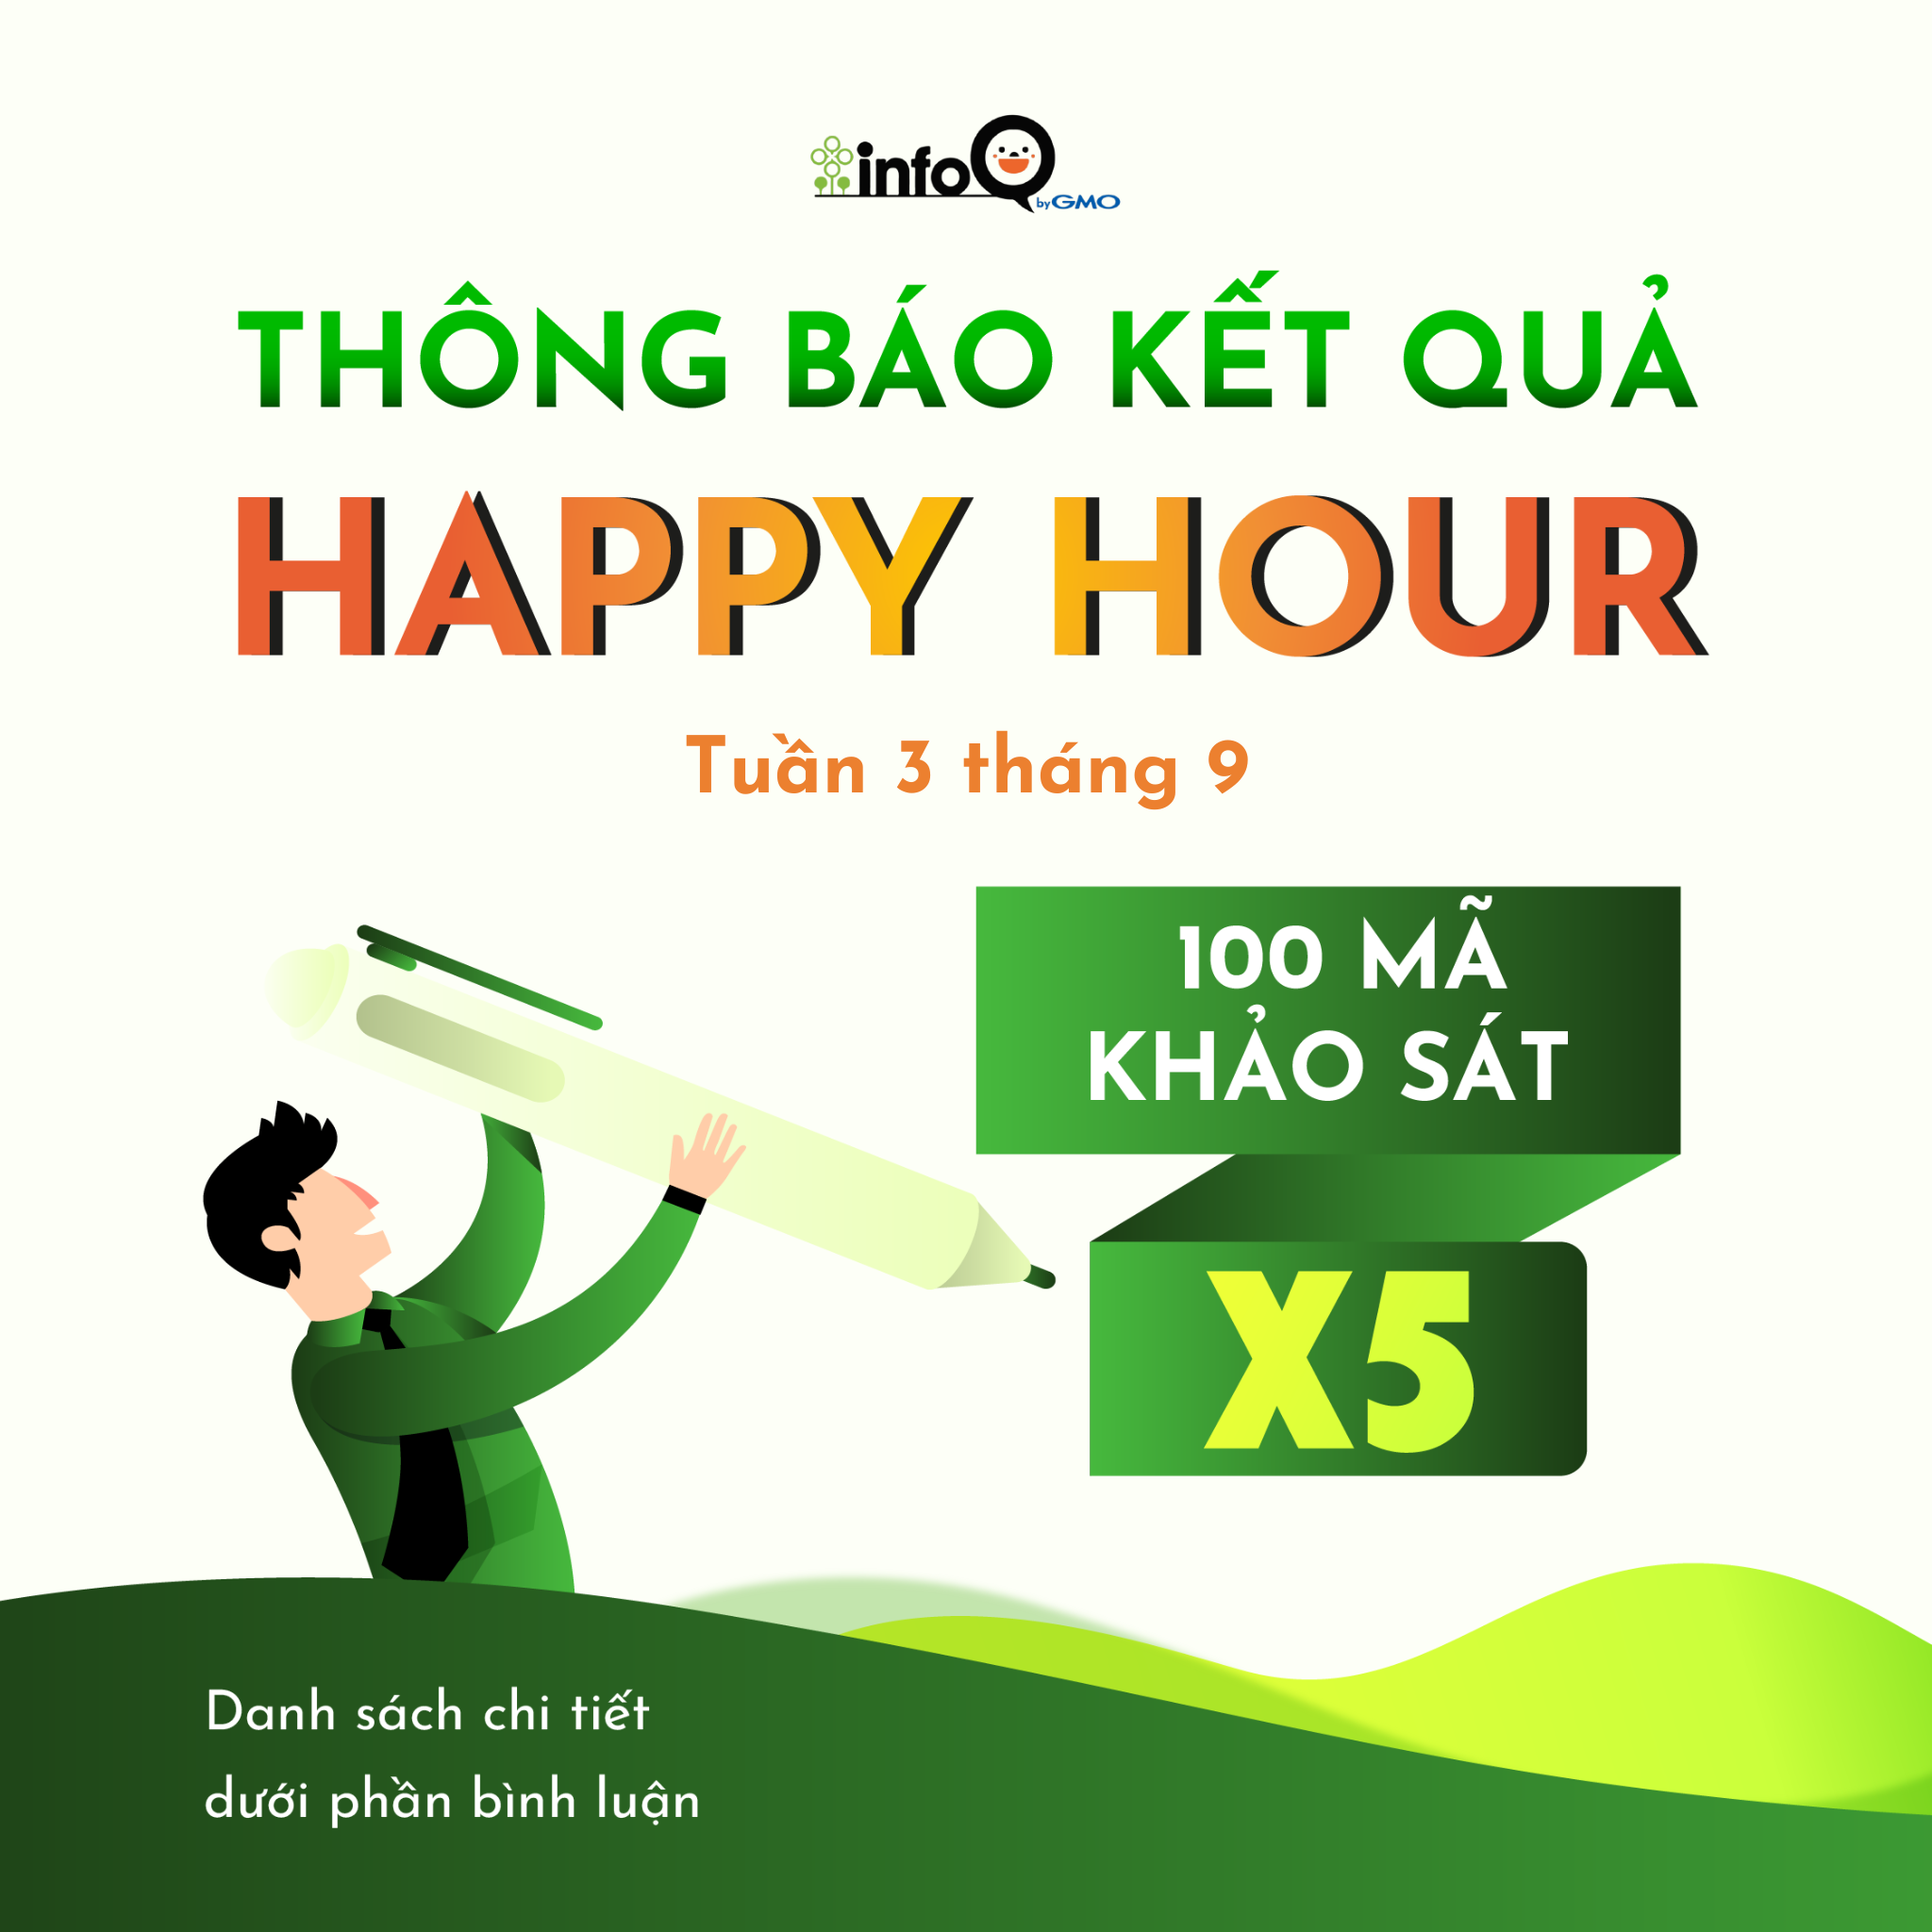 ket-qua-chuong-trinh-happy-hour-tuan-3-thang-9-1